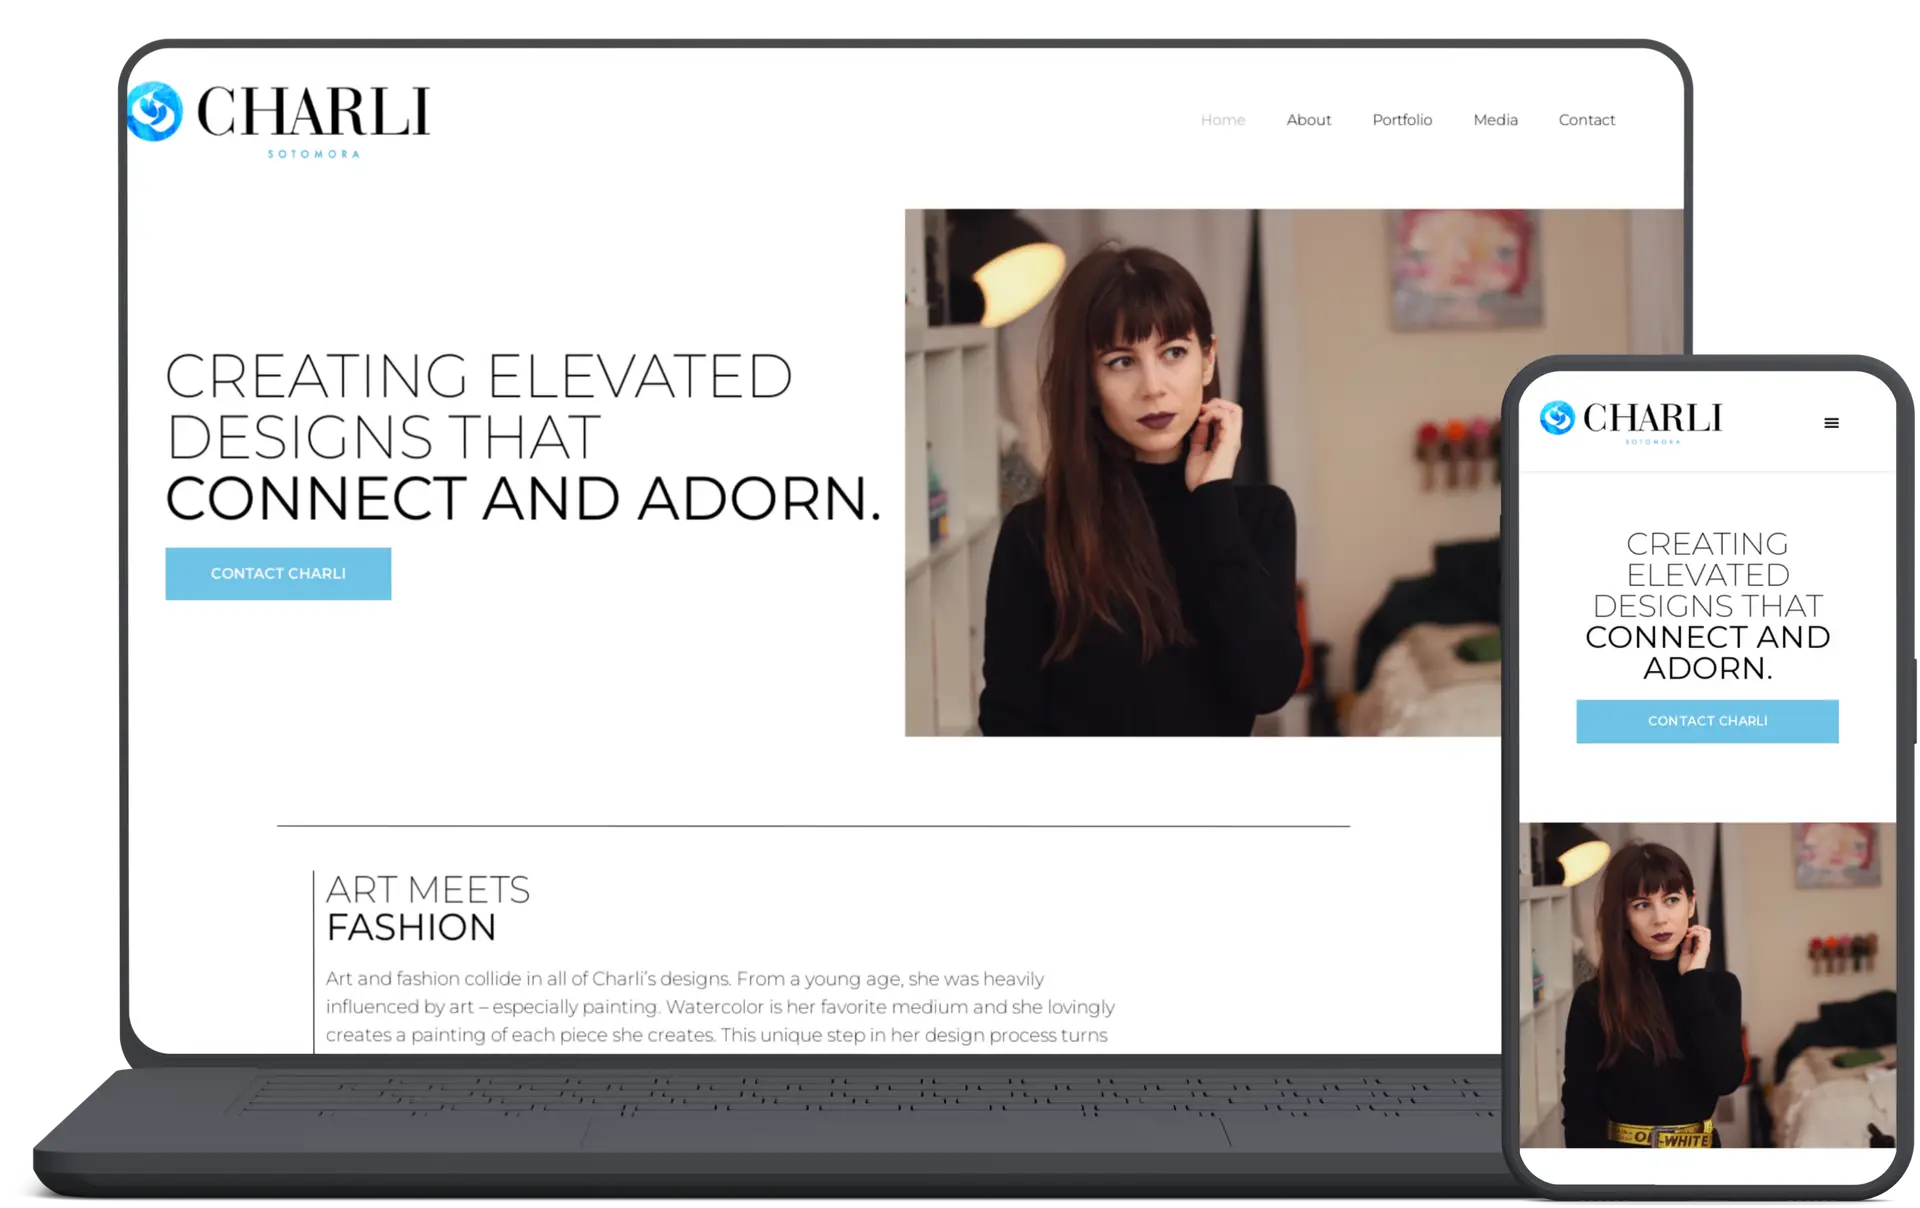 Mockup of Charli Sotomora's website - designed by Digon Design